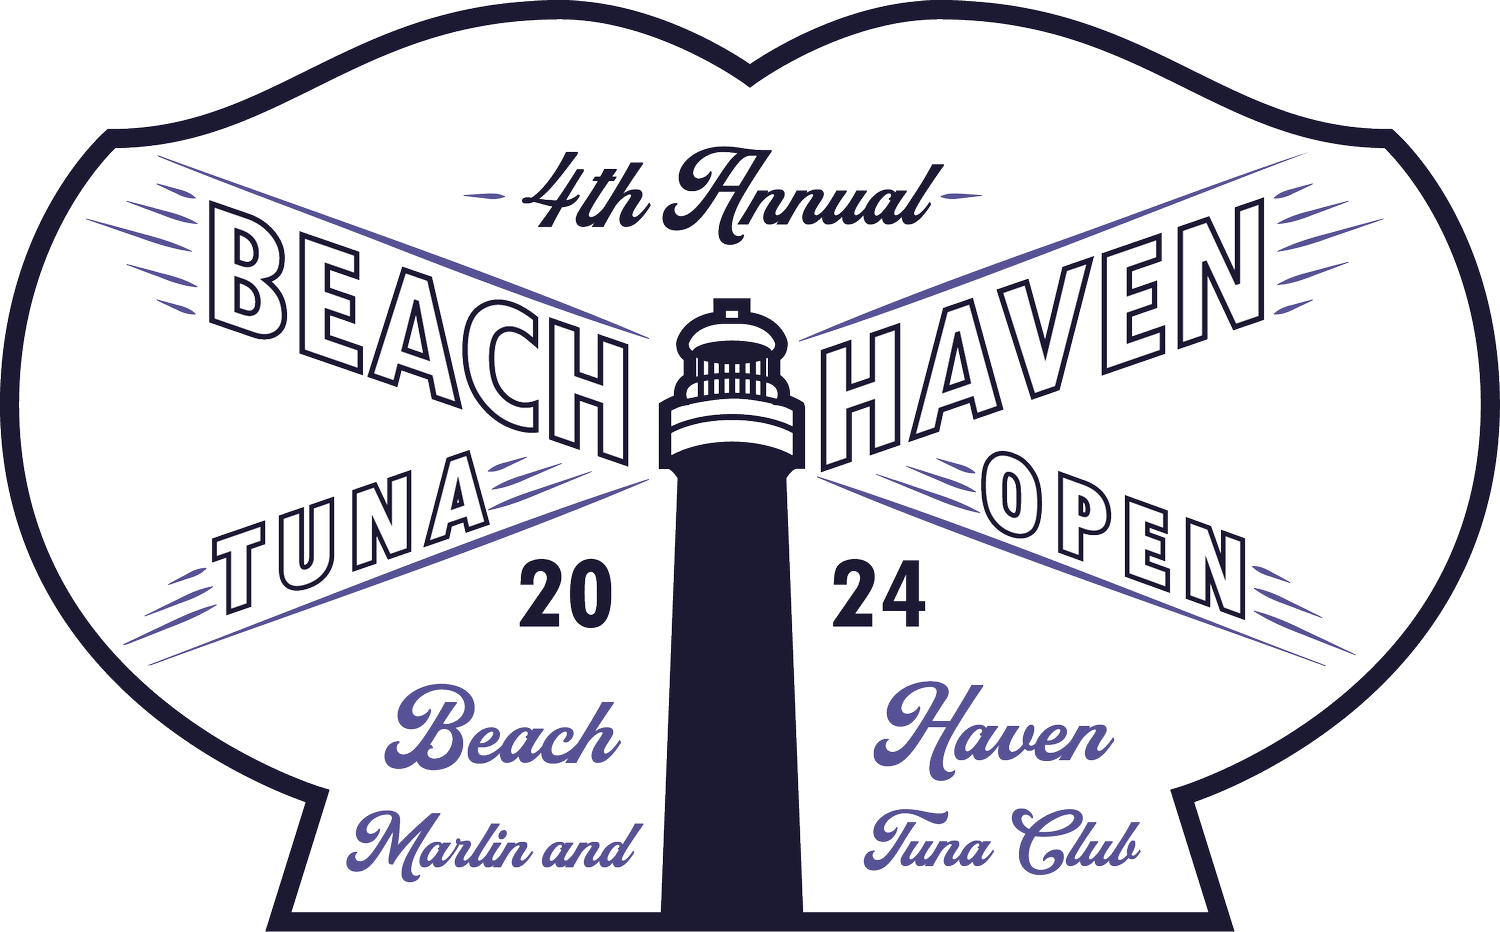 BH Tuna Open